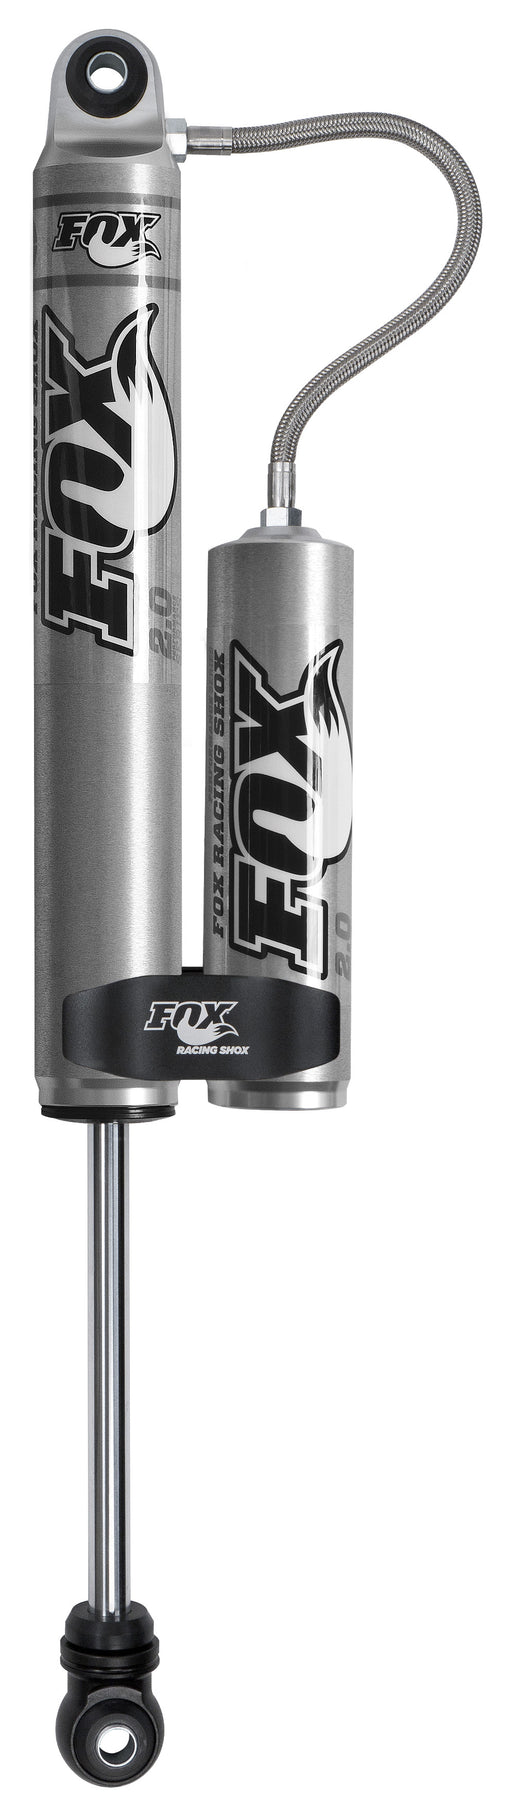 Fox Racing Shox 980-24-960 Performance Series Shock Absorber